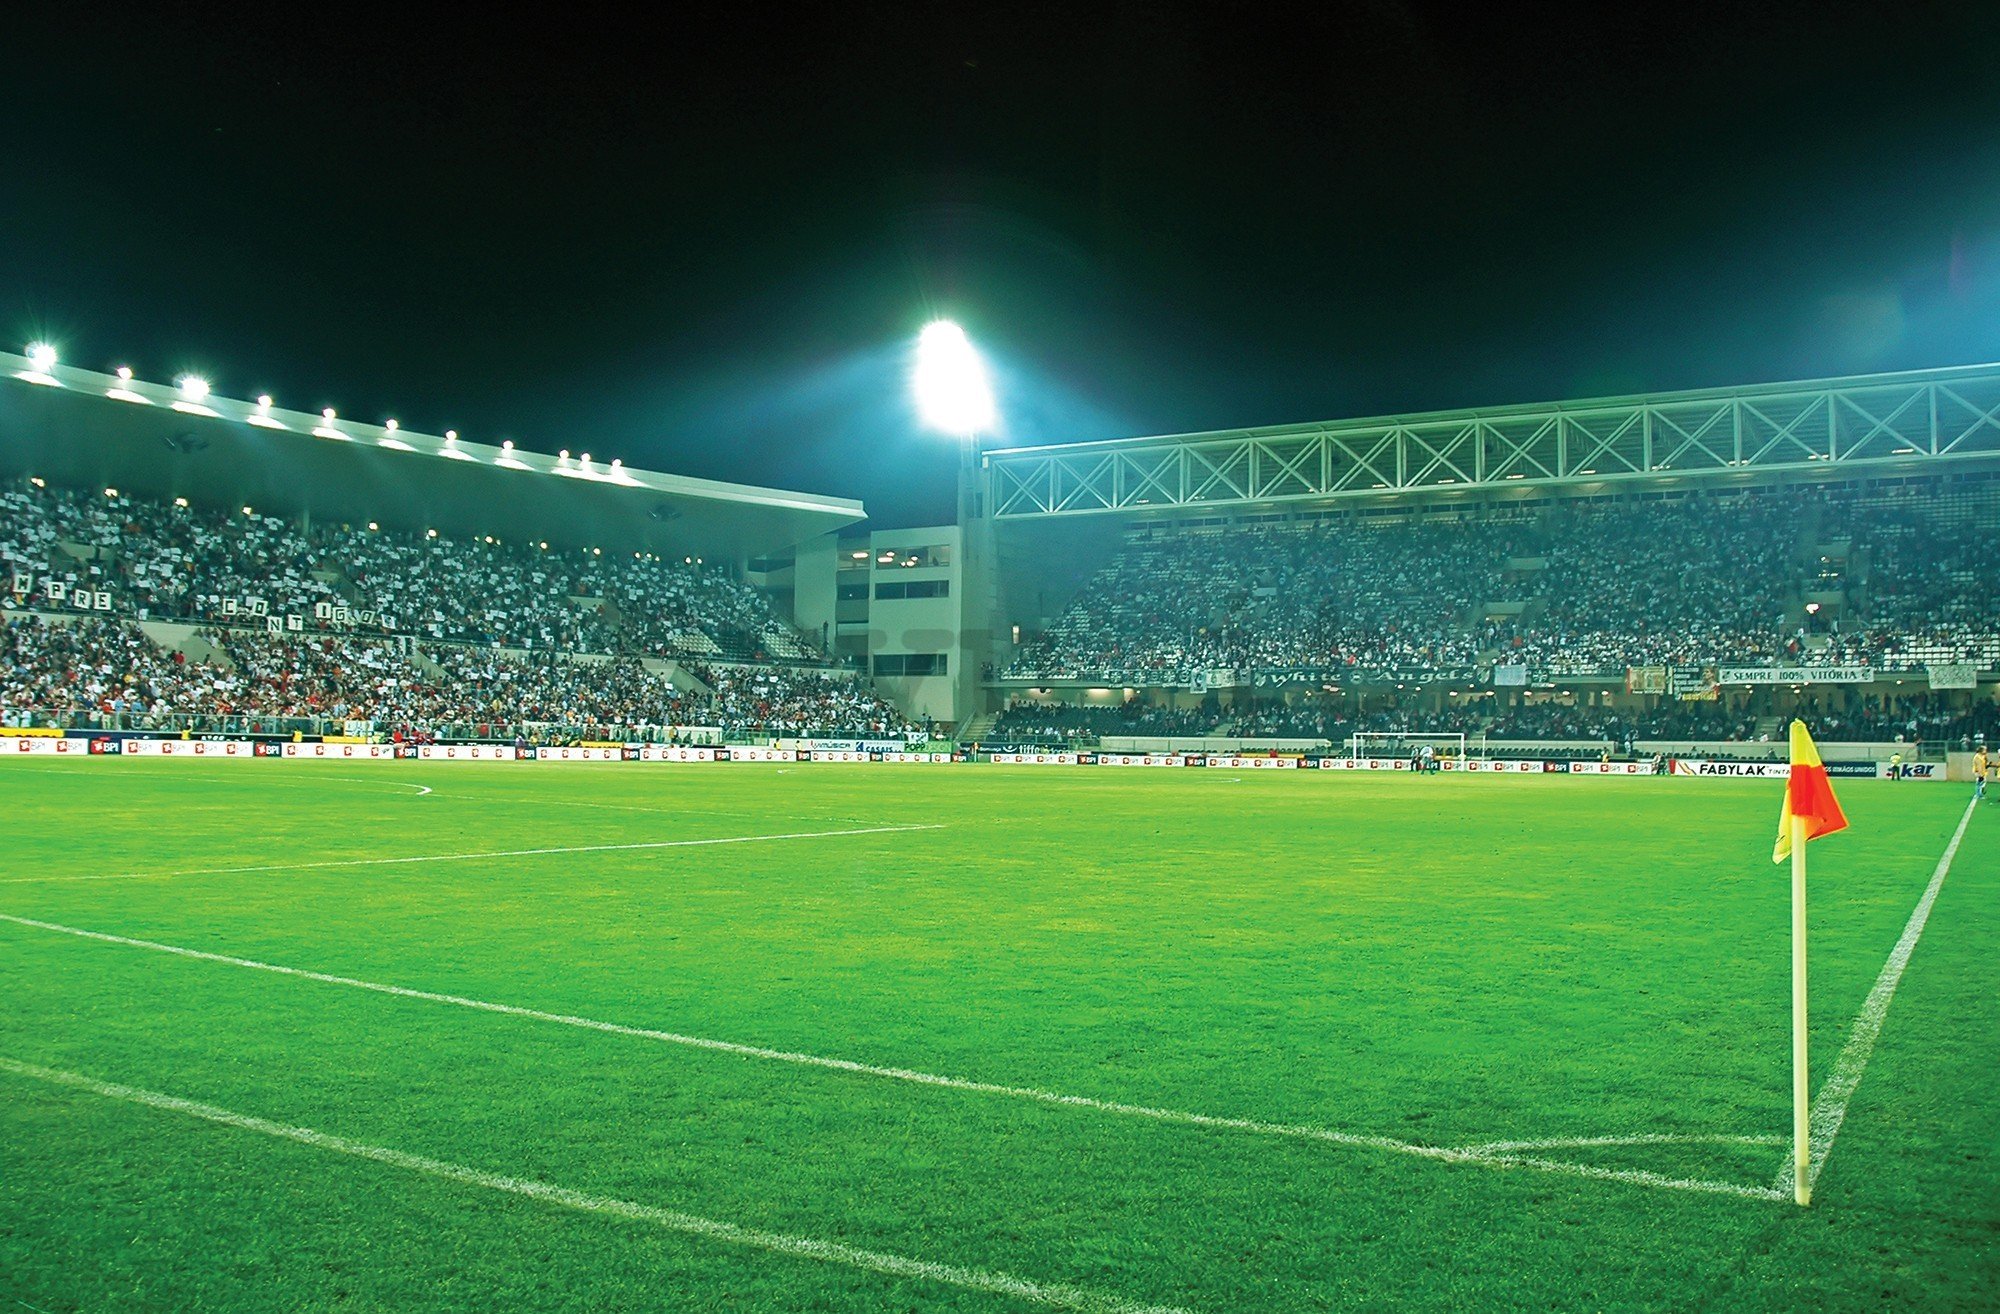 Fotomurale in TNT: Stadio di calcio (3) - 416x254 cm